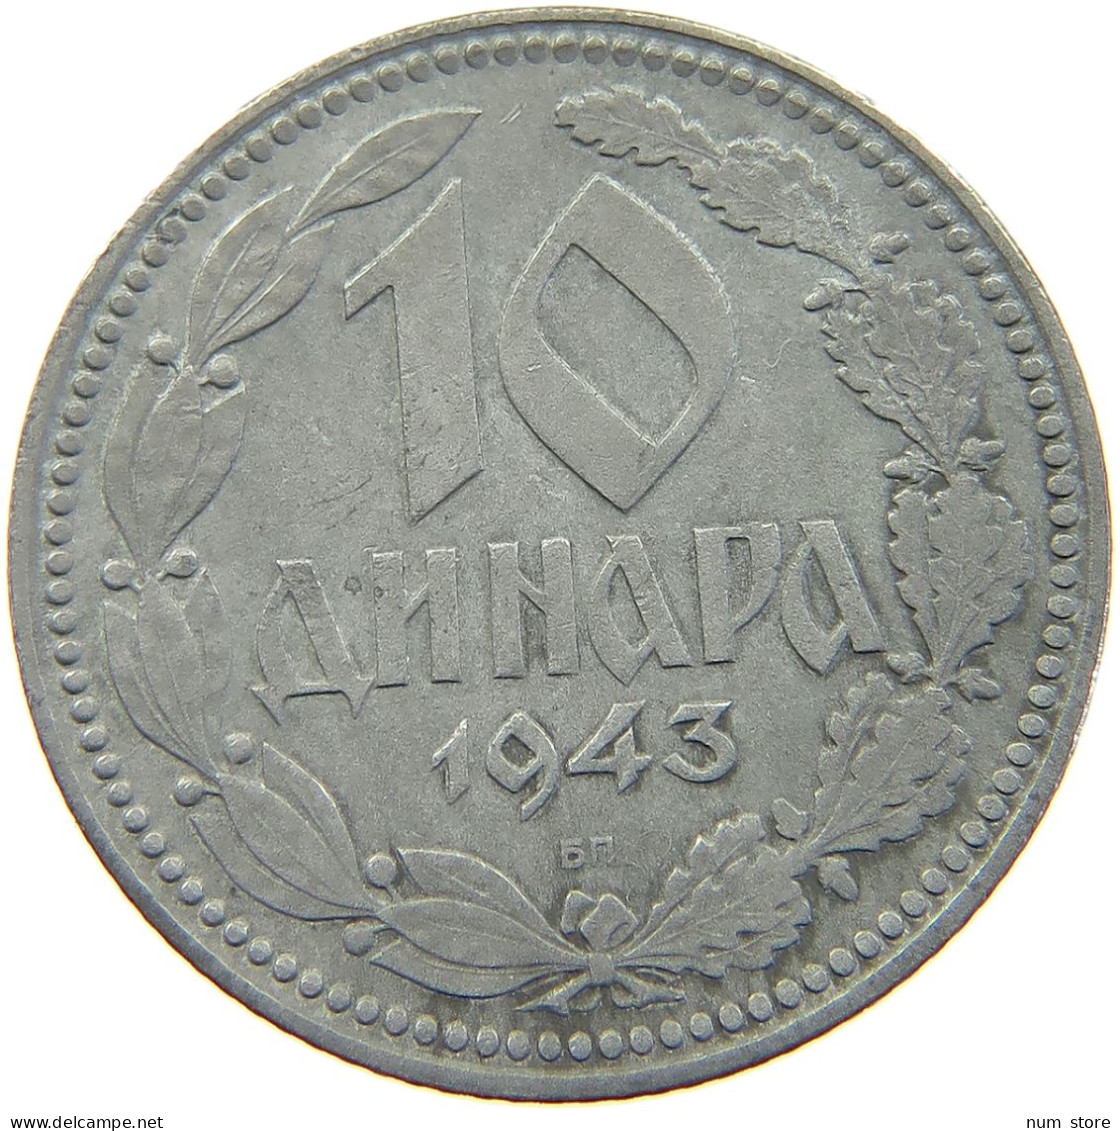 SERBIA 10 DINARA 1943  #a049 0501 - Serbien